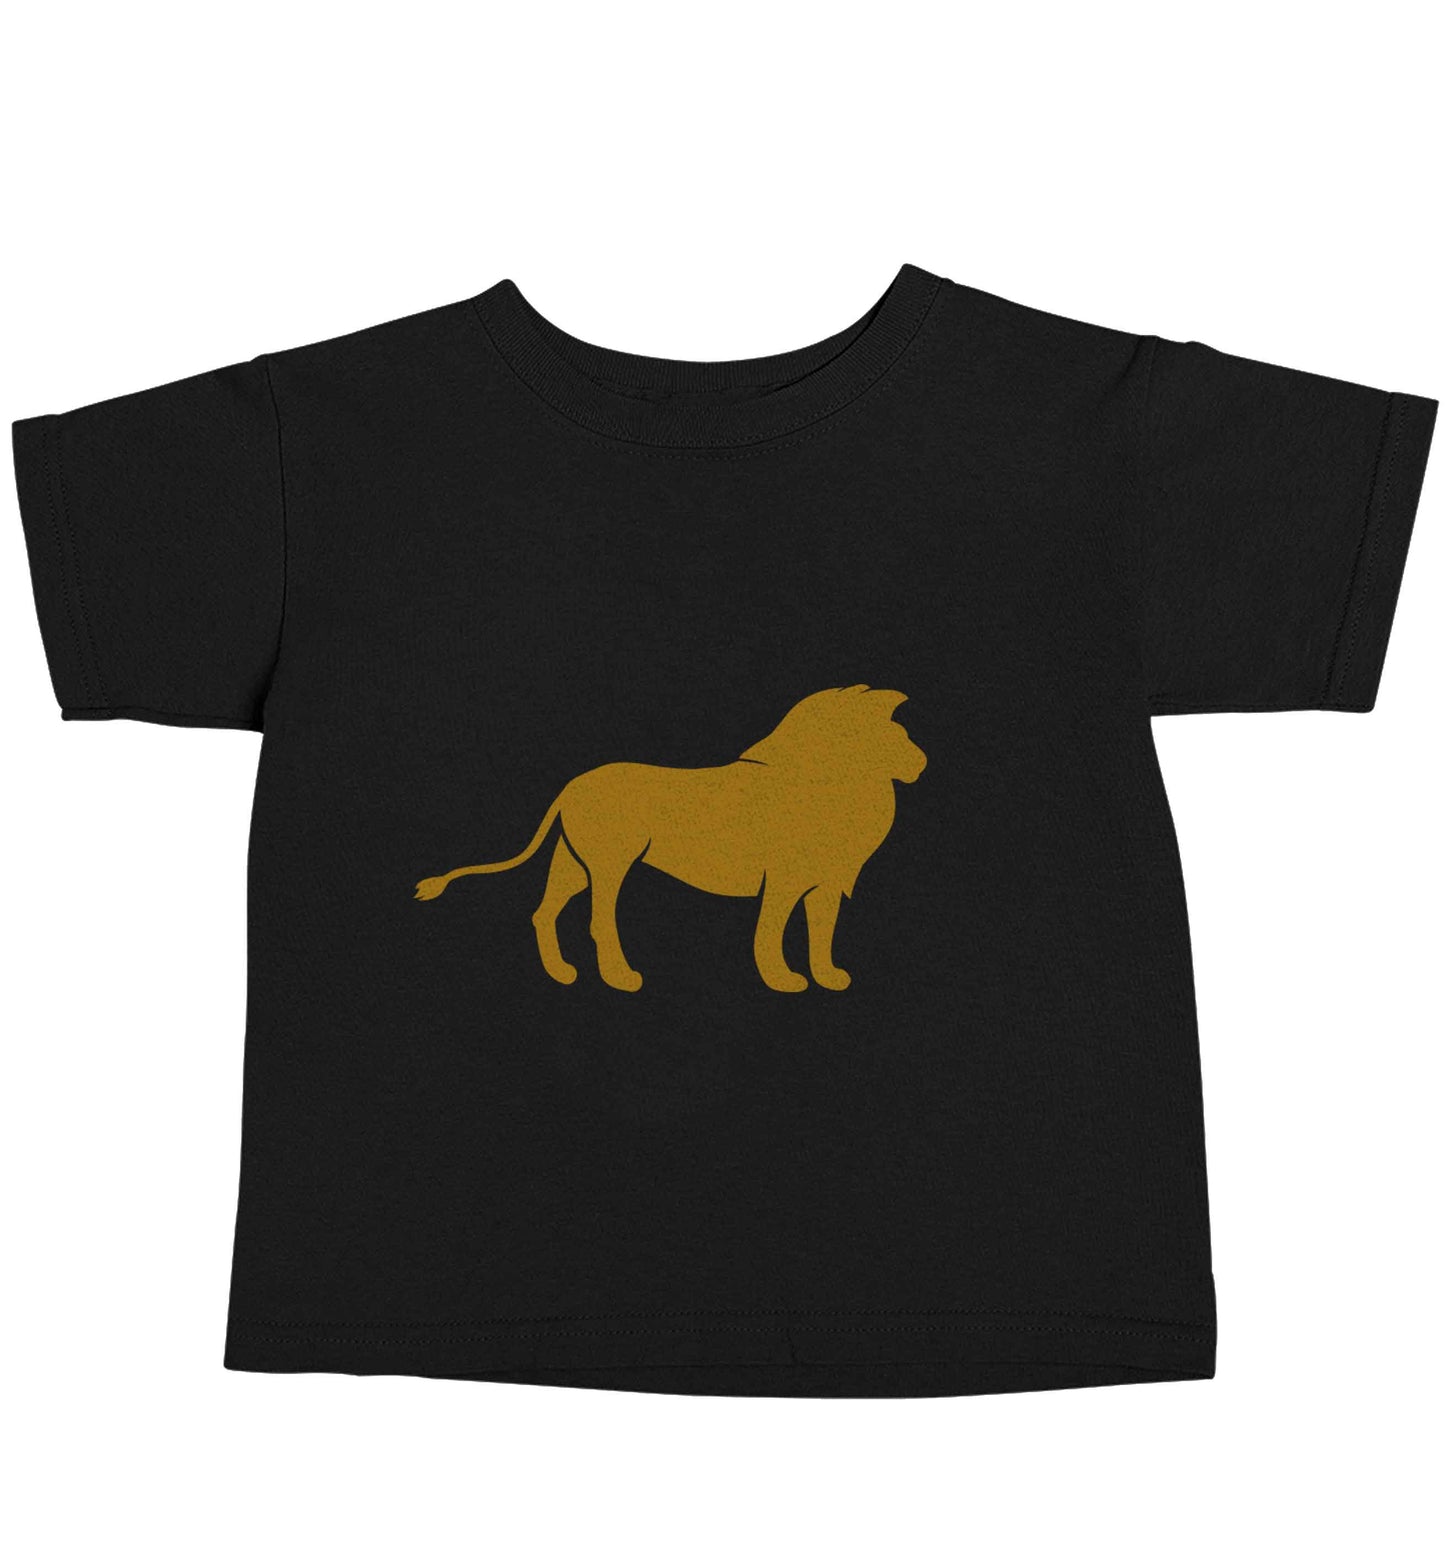 Gold lion Black baby toddler Tshirt 2 years